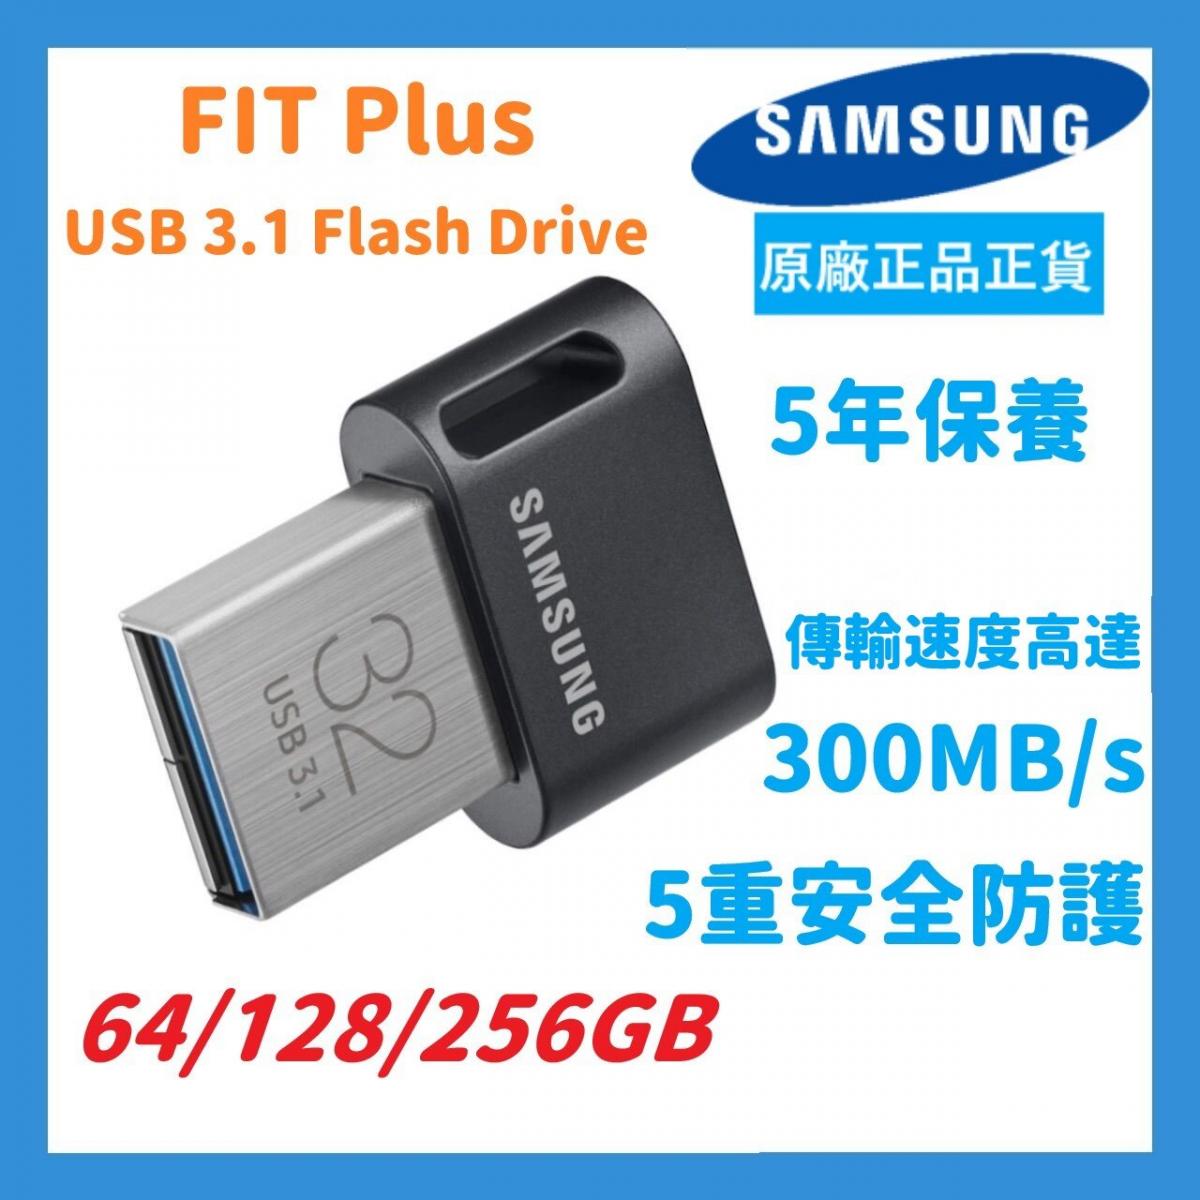 128GB FIT Plus USB 3.1 Flash Drive (MUF-128AB/APC) - Original goods